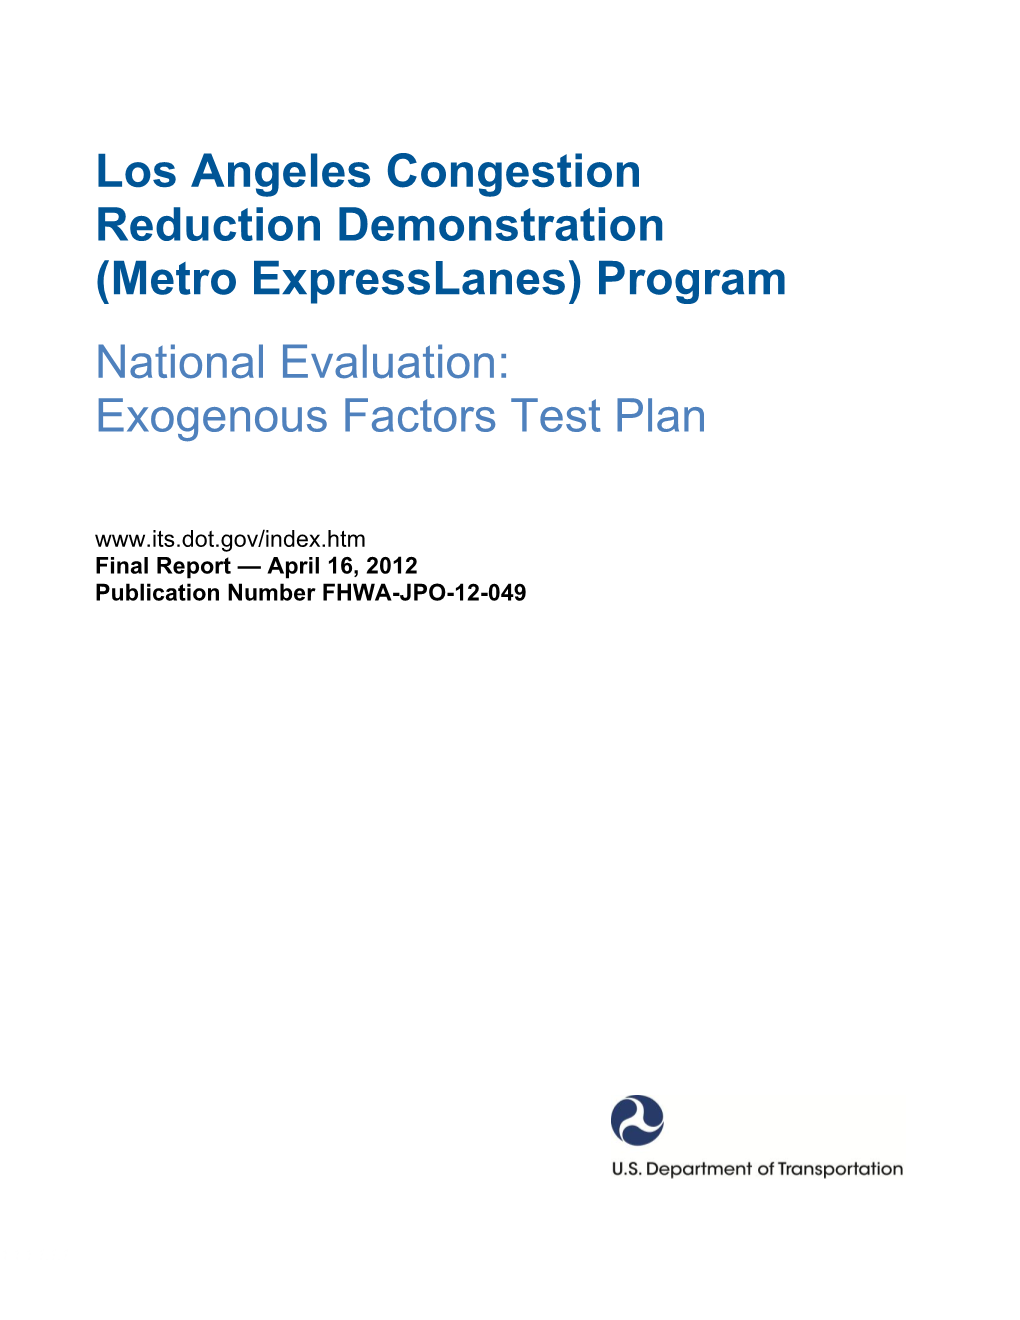 Los Angeles Congestion Reduction Demonstration April 16, 2012 (Metro Expresslanes) Program: Exogenous Factors Test Plan – FINAL 6